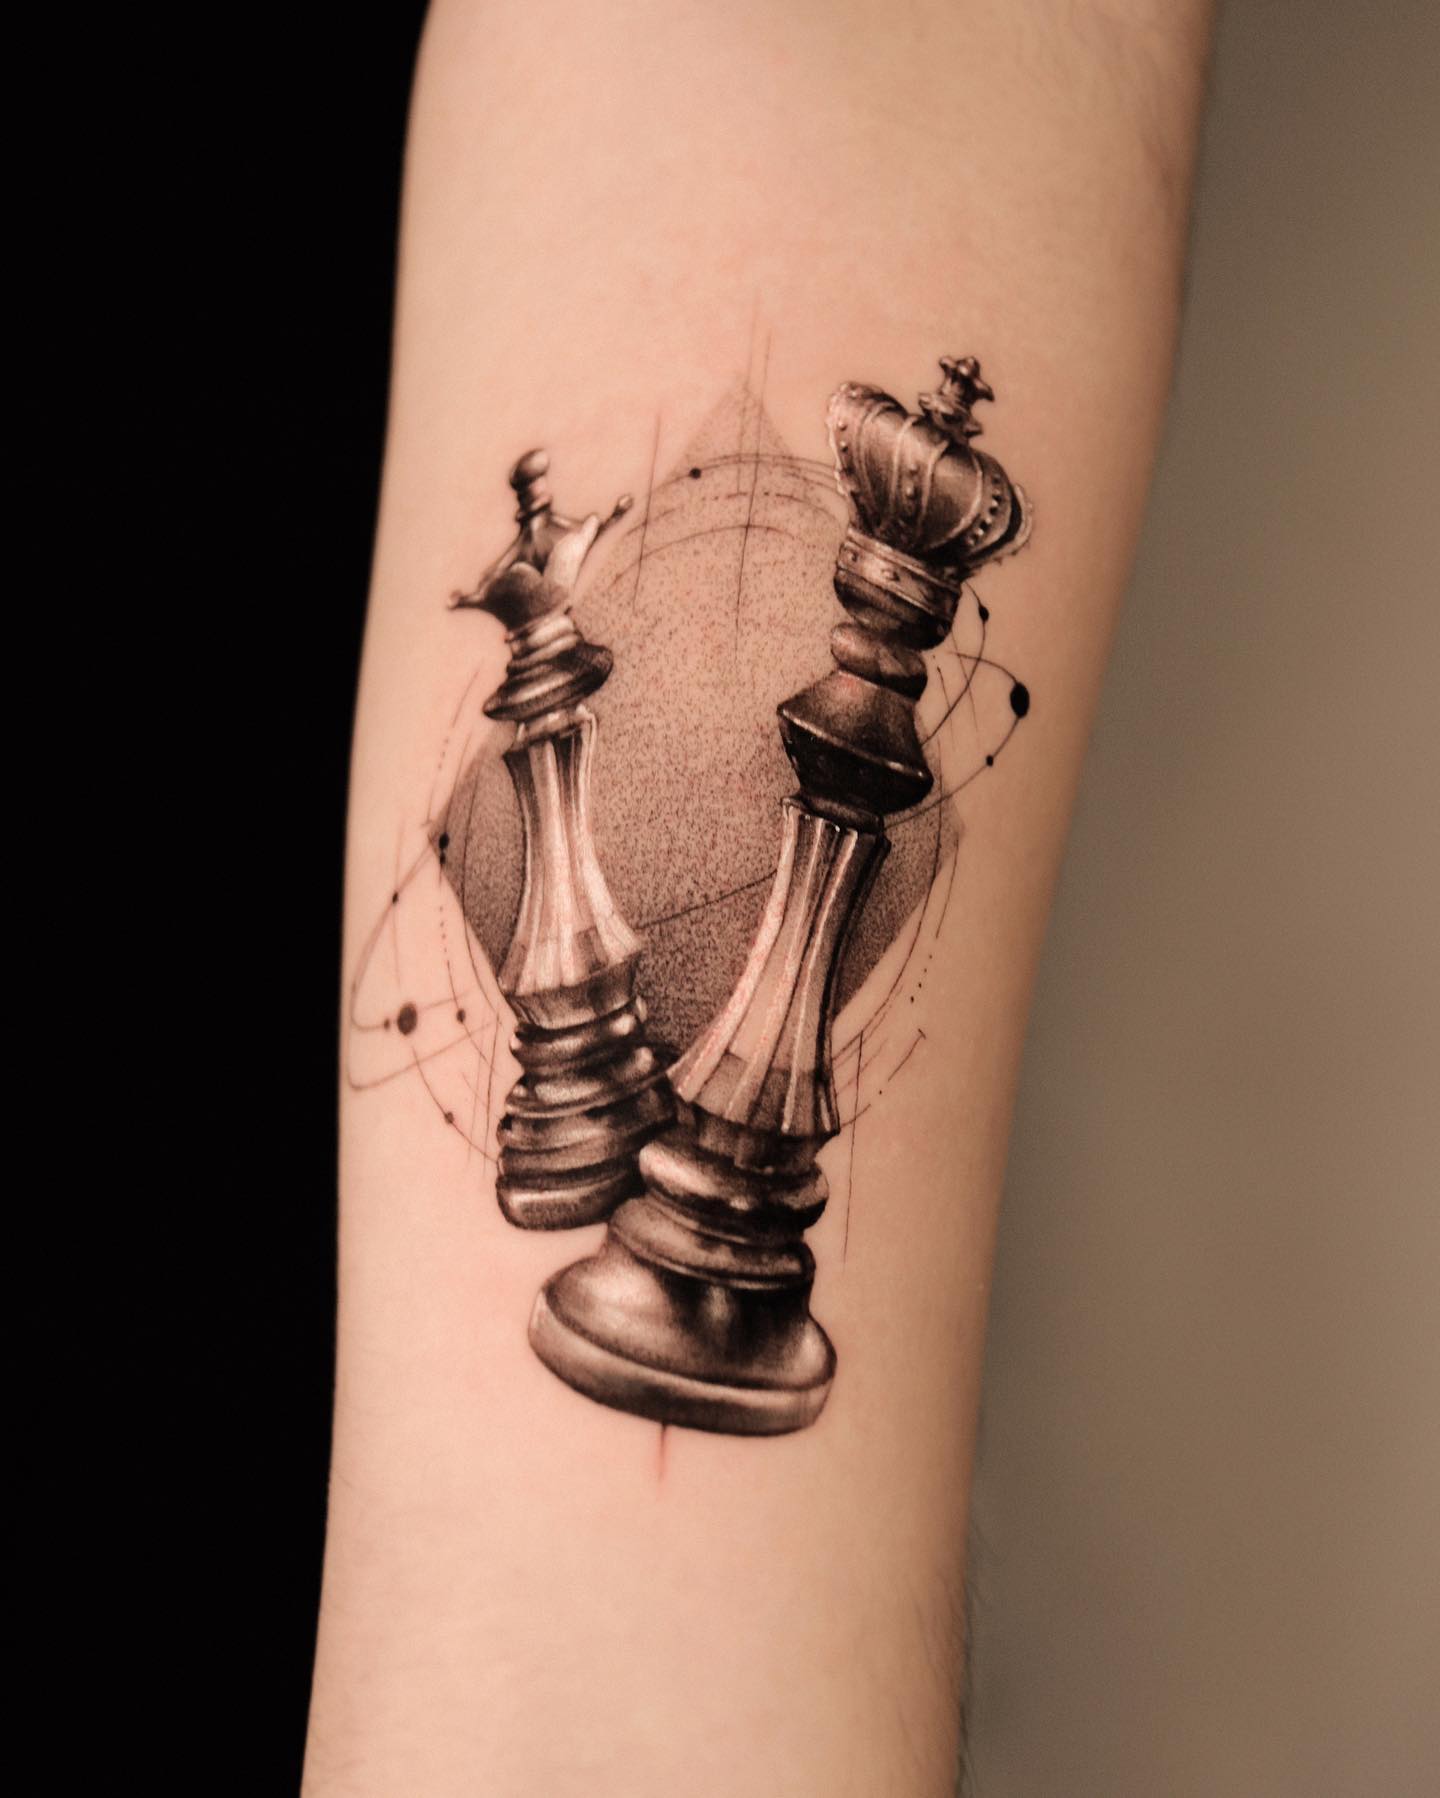 Tatuaje de ajedrez en dos piezas.